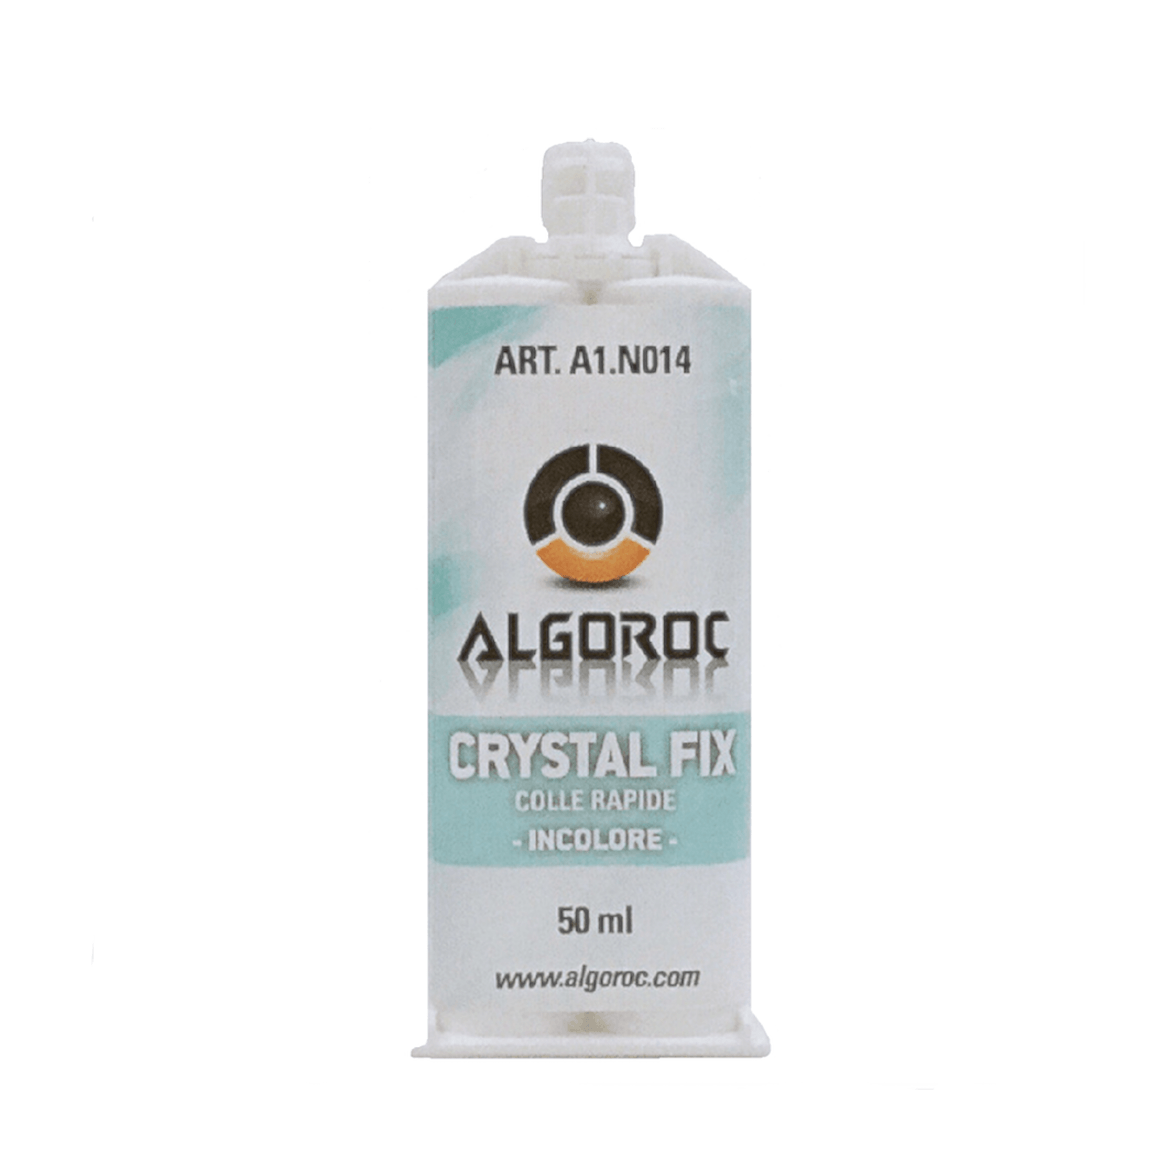 Colle méthacrylate transparente CRYSTAL FIX ALGOROC